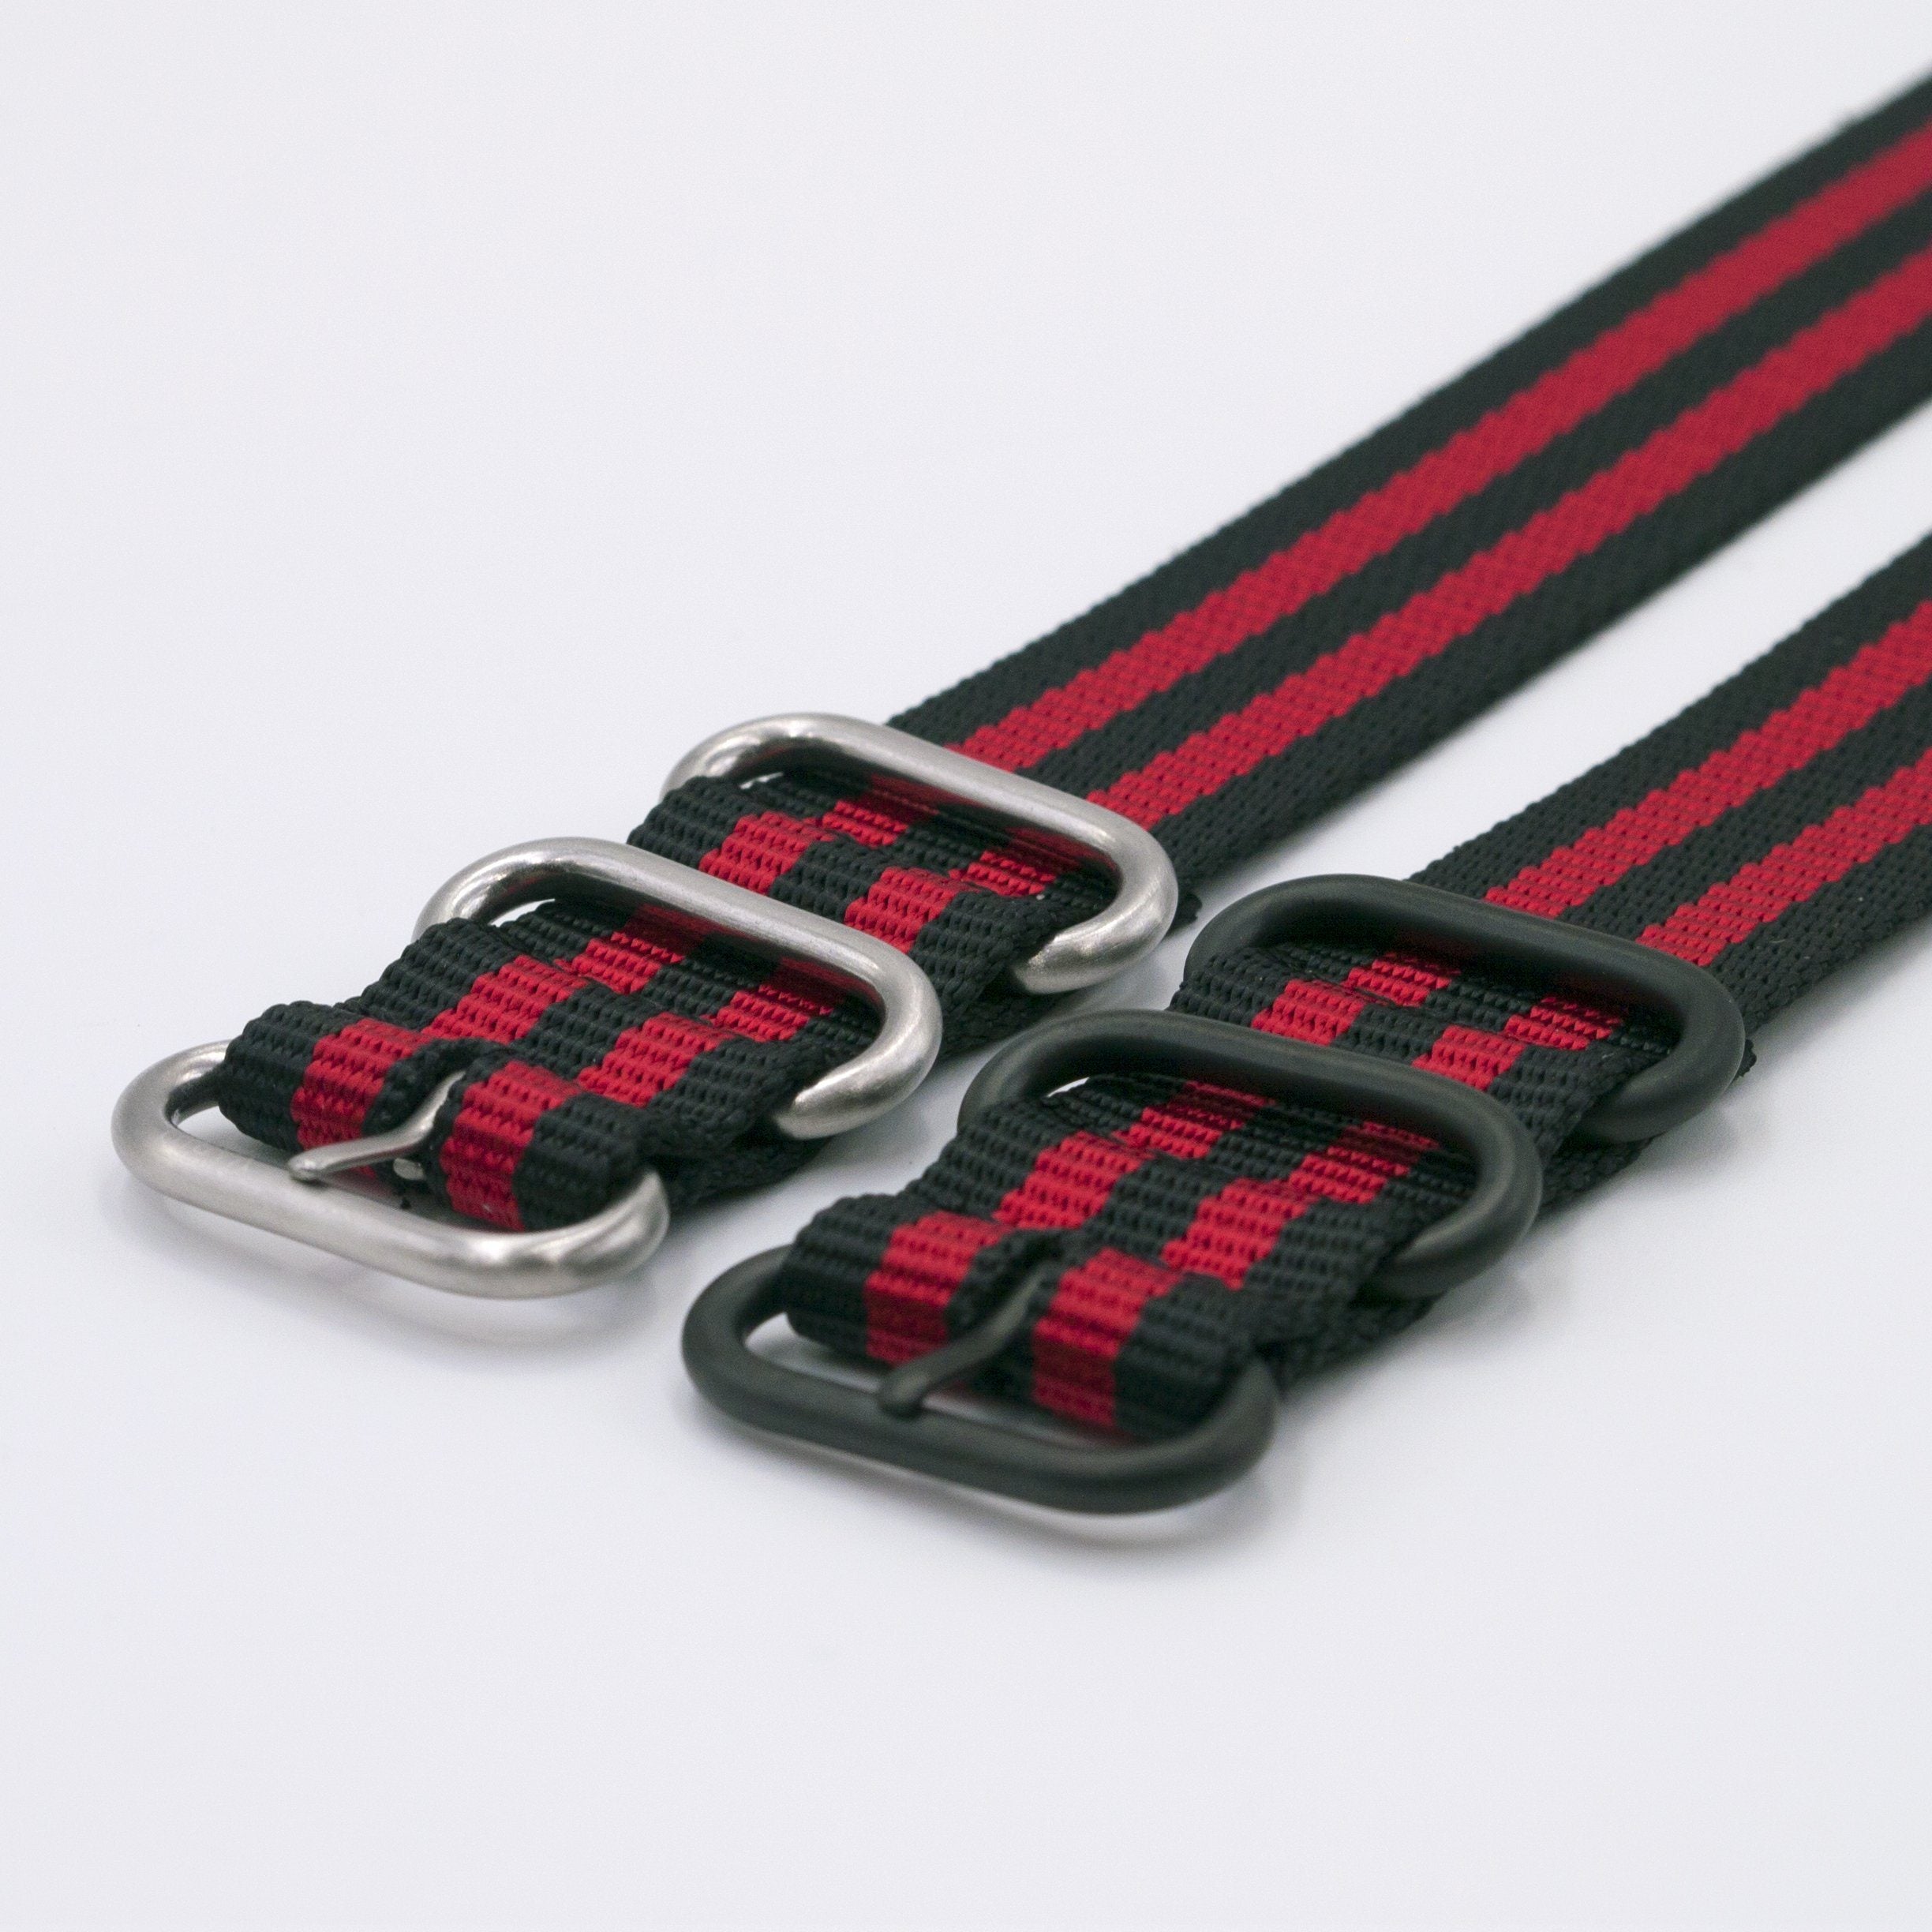 vario ballistic nylon red black stripe maratac strap with casio g shock adapter silver and black buckle